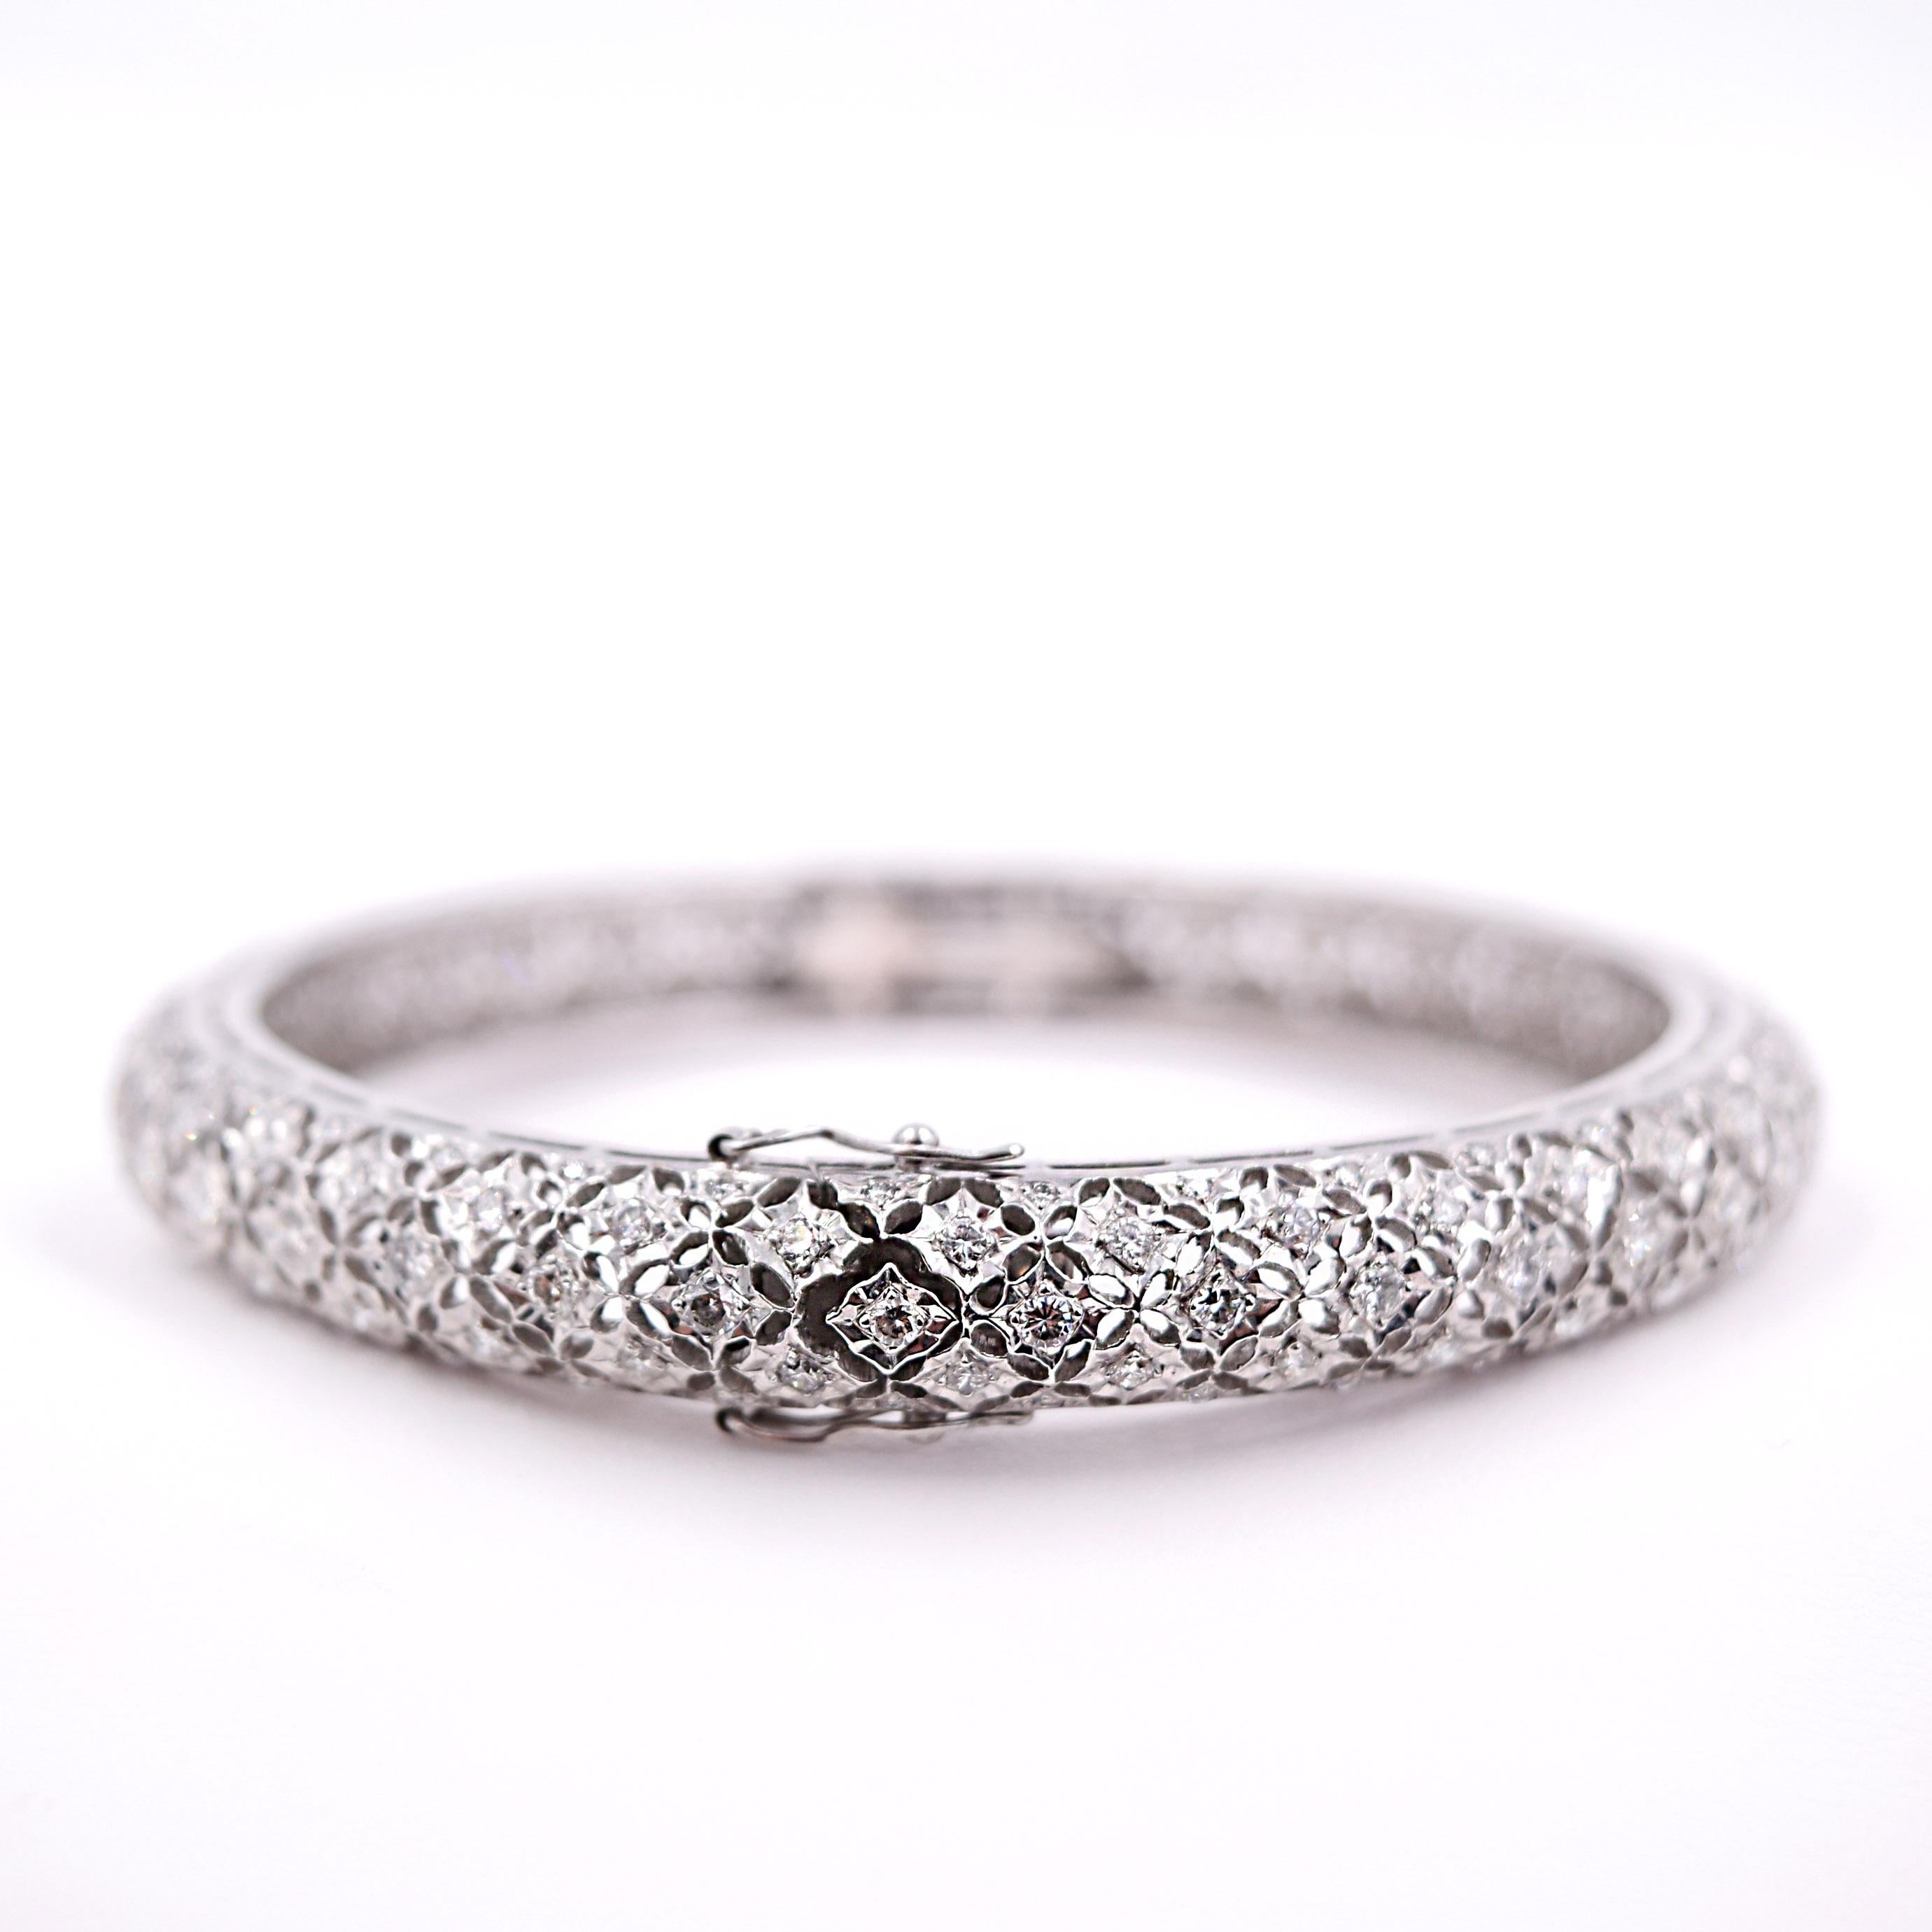 Romantic Vintage Sethi Couture 5.1 Carat Diamond Bangle Bracelet in 18 Karat White Gold For Sale